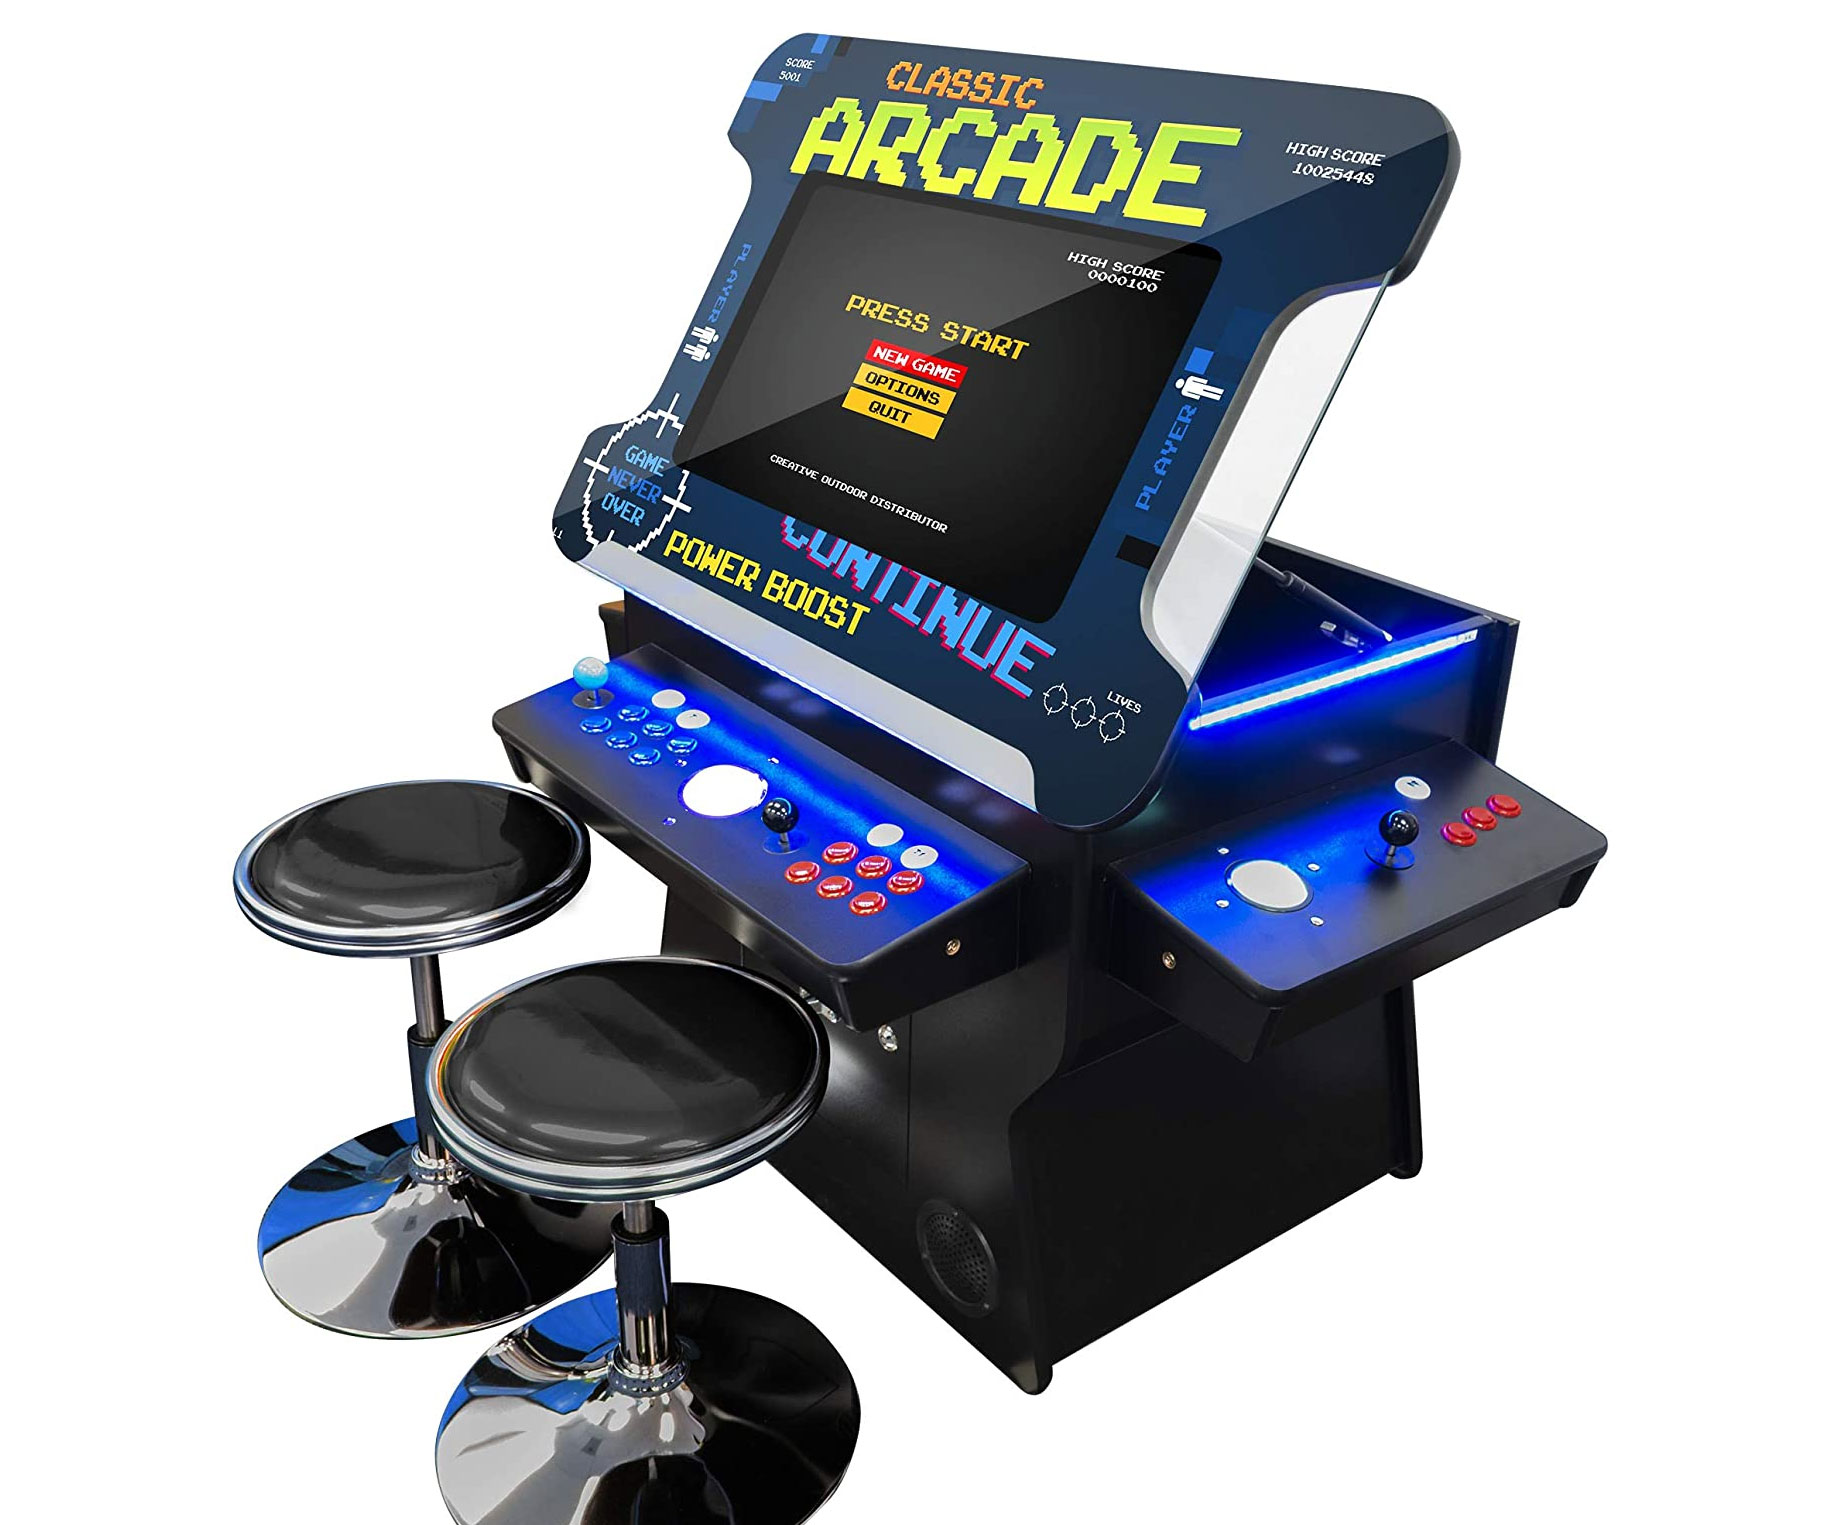 Commercial Grade Arcade Machine